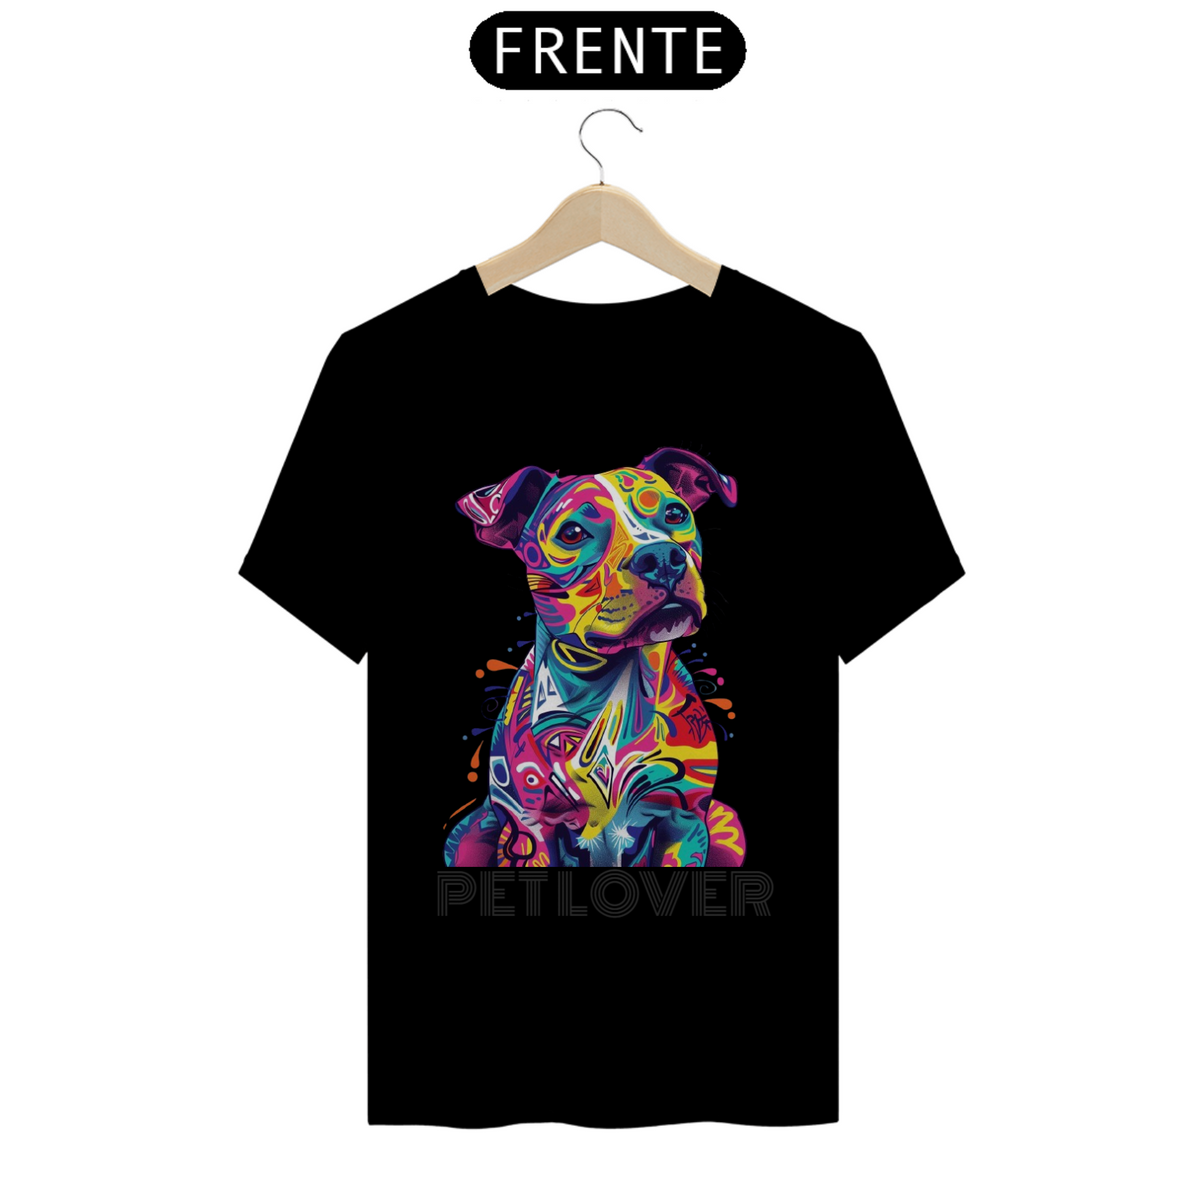 Nome do produto: Camiseta Prime Pet Lover